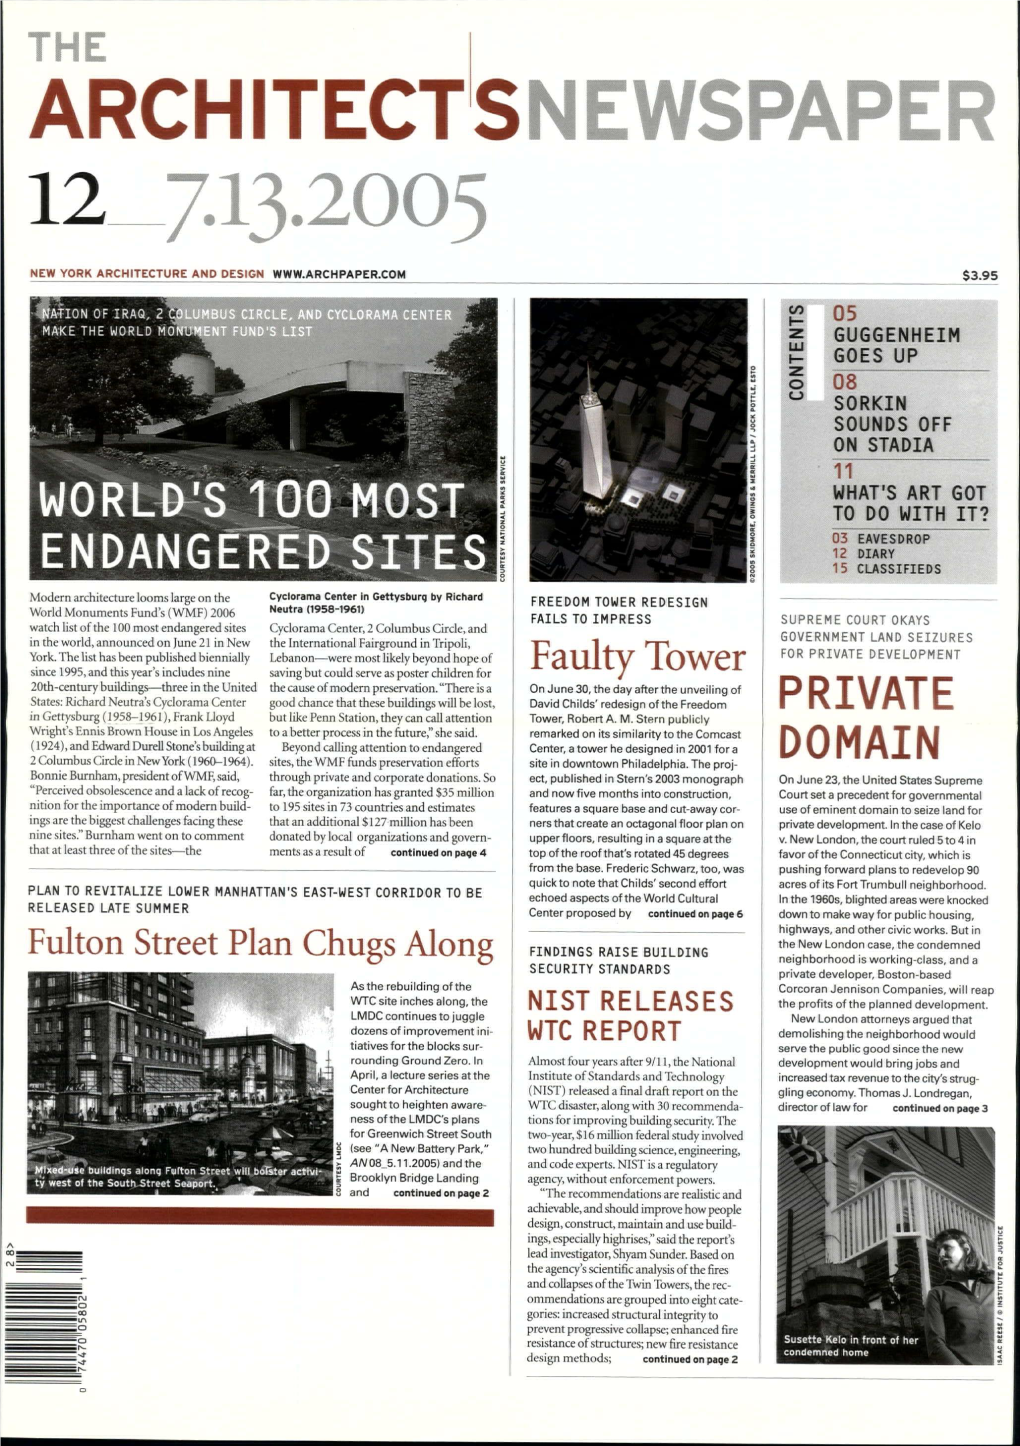 Architectsnewspaper 12 7.13.2005